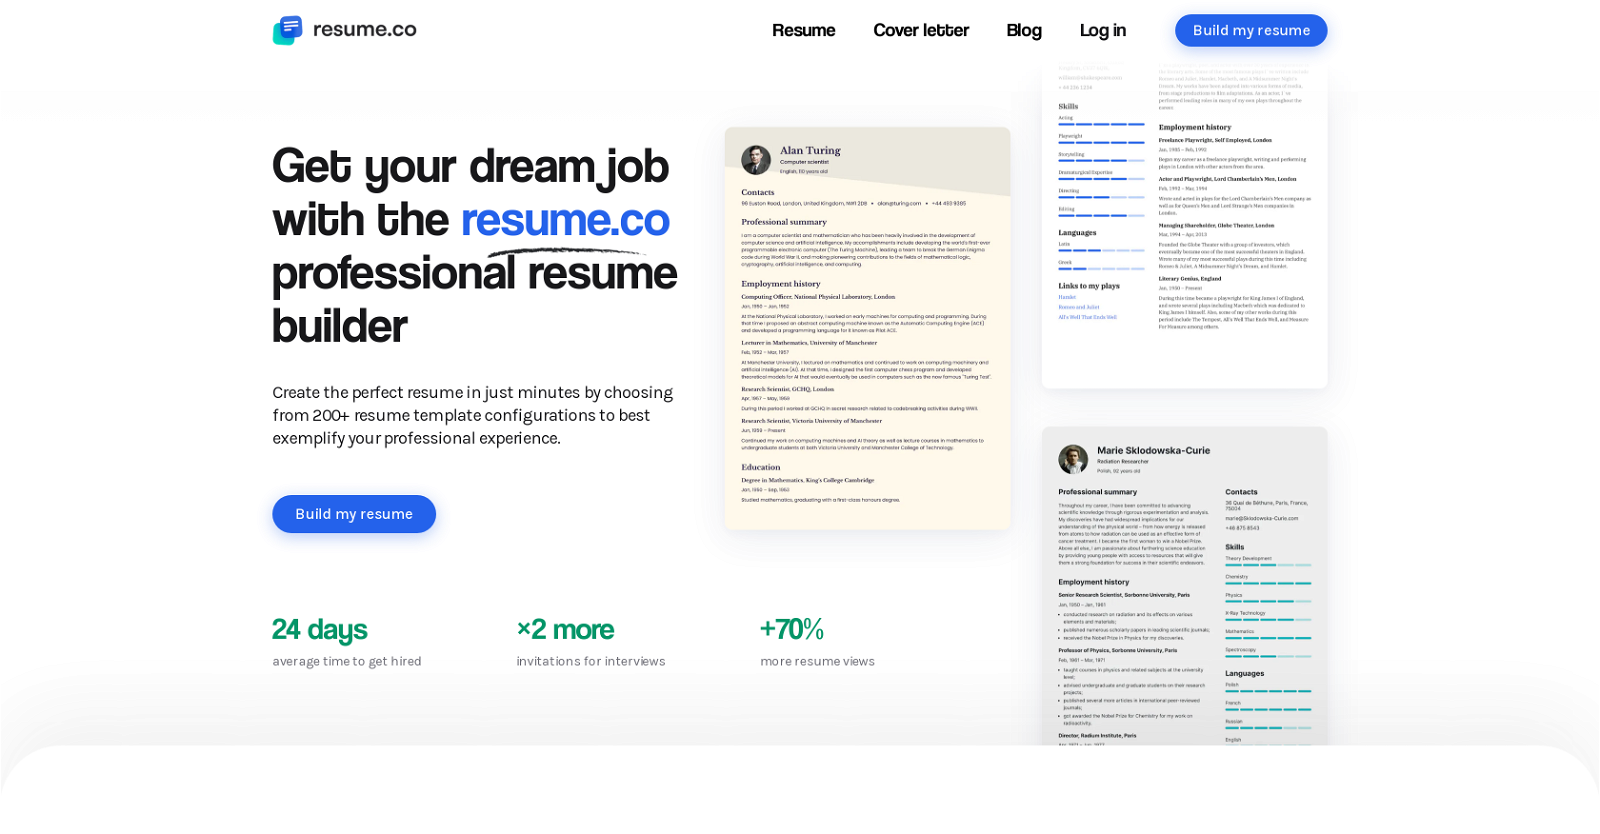 Resume.co website